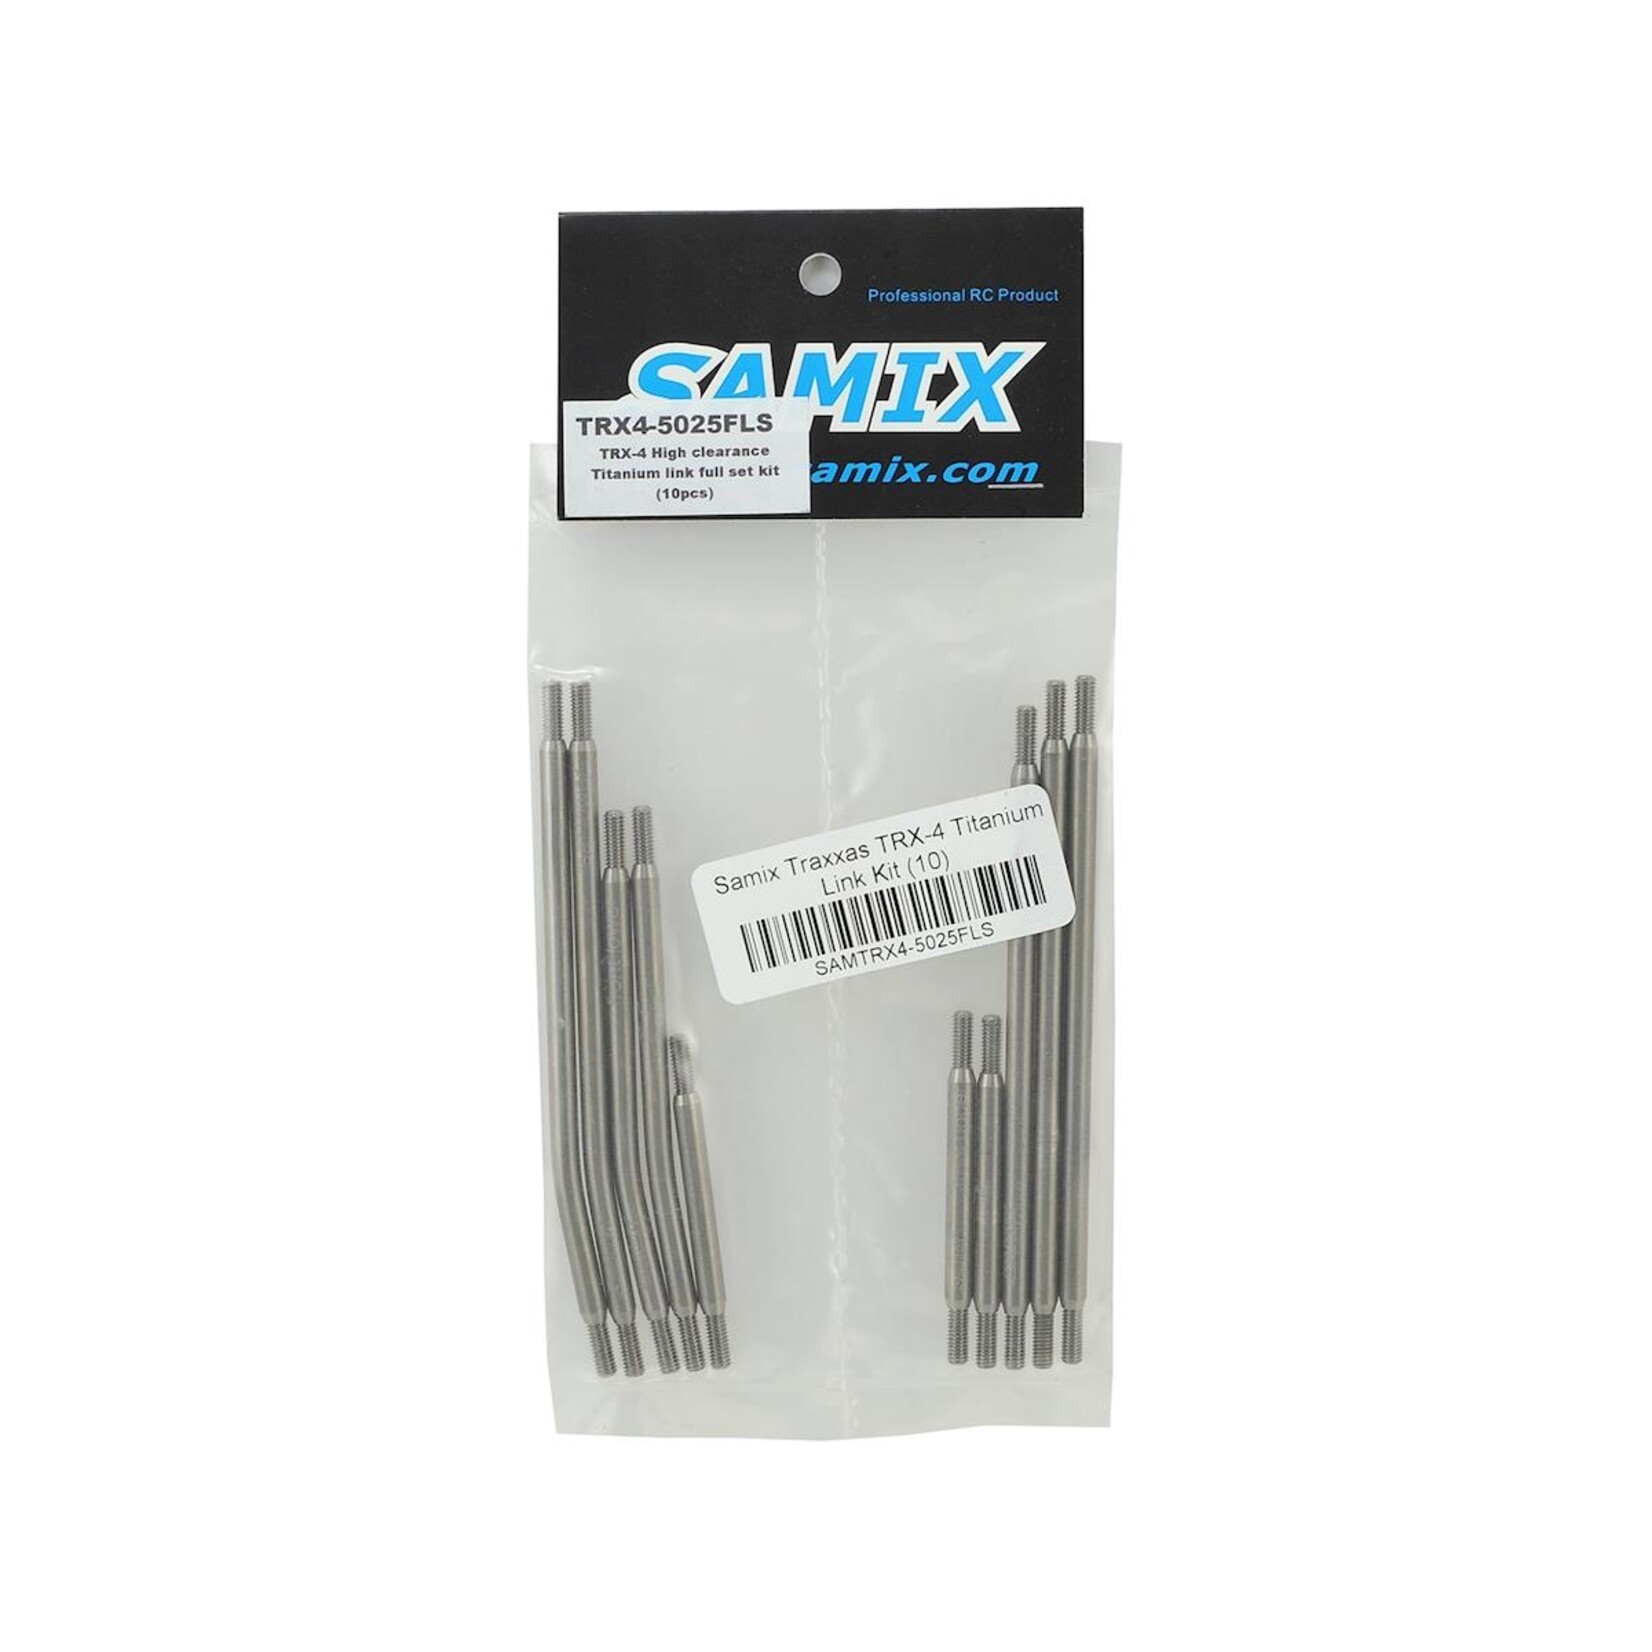 Samix Samix Traxxas TRX-4 324mm Titanium High Clearance Link Kit (10) #TRX4-5025FLS